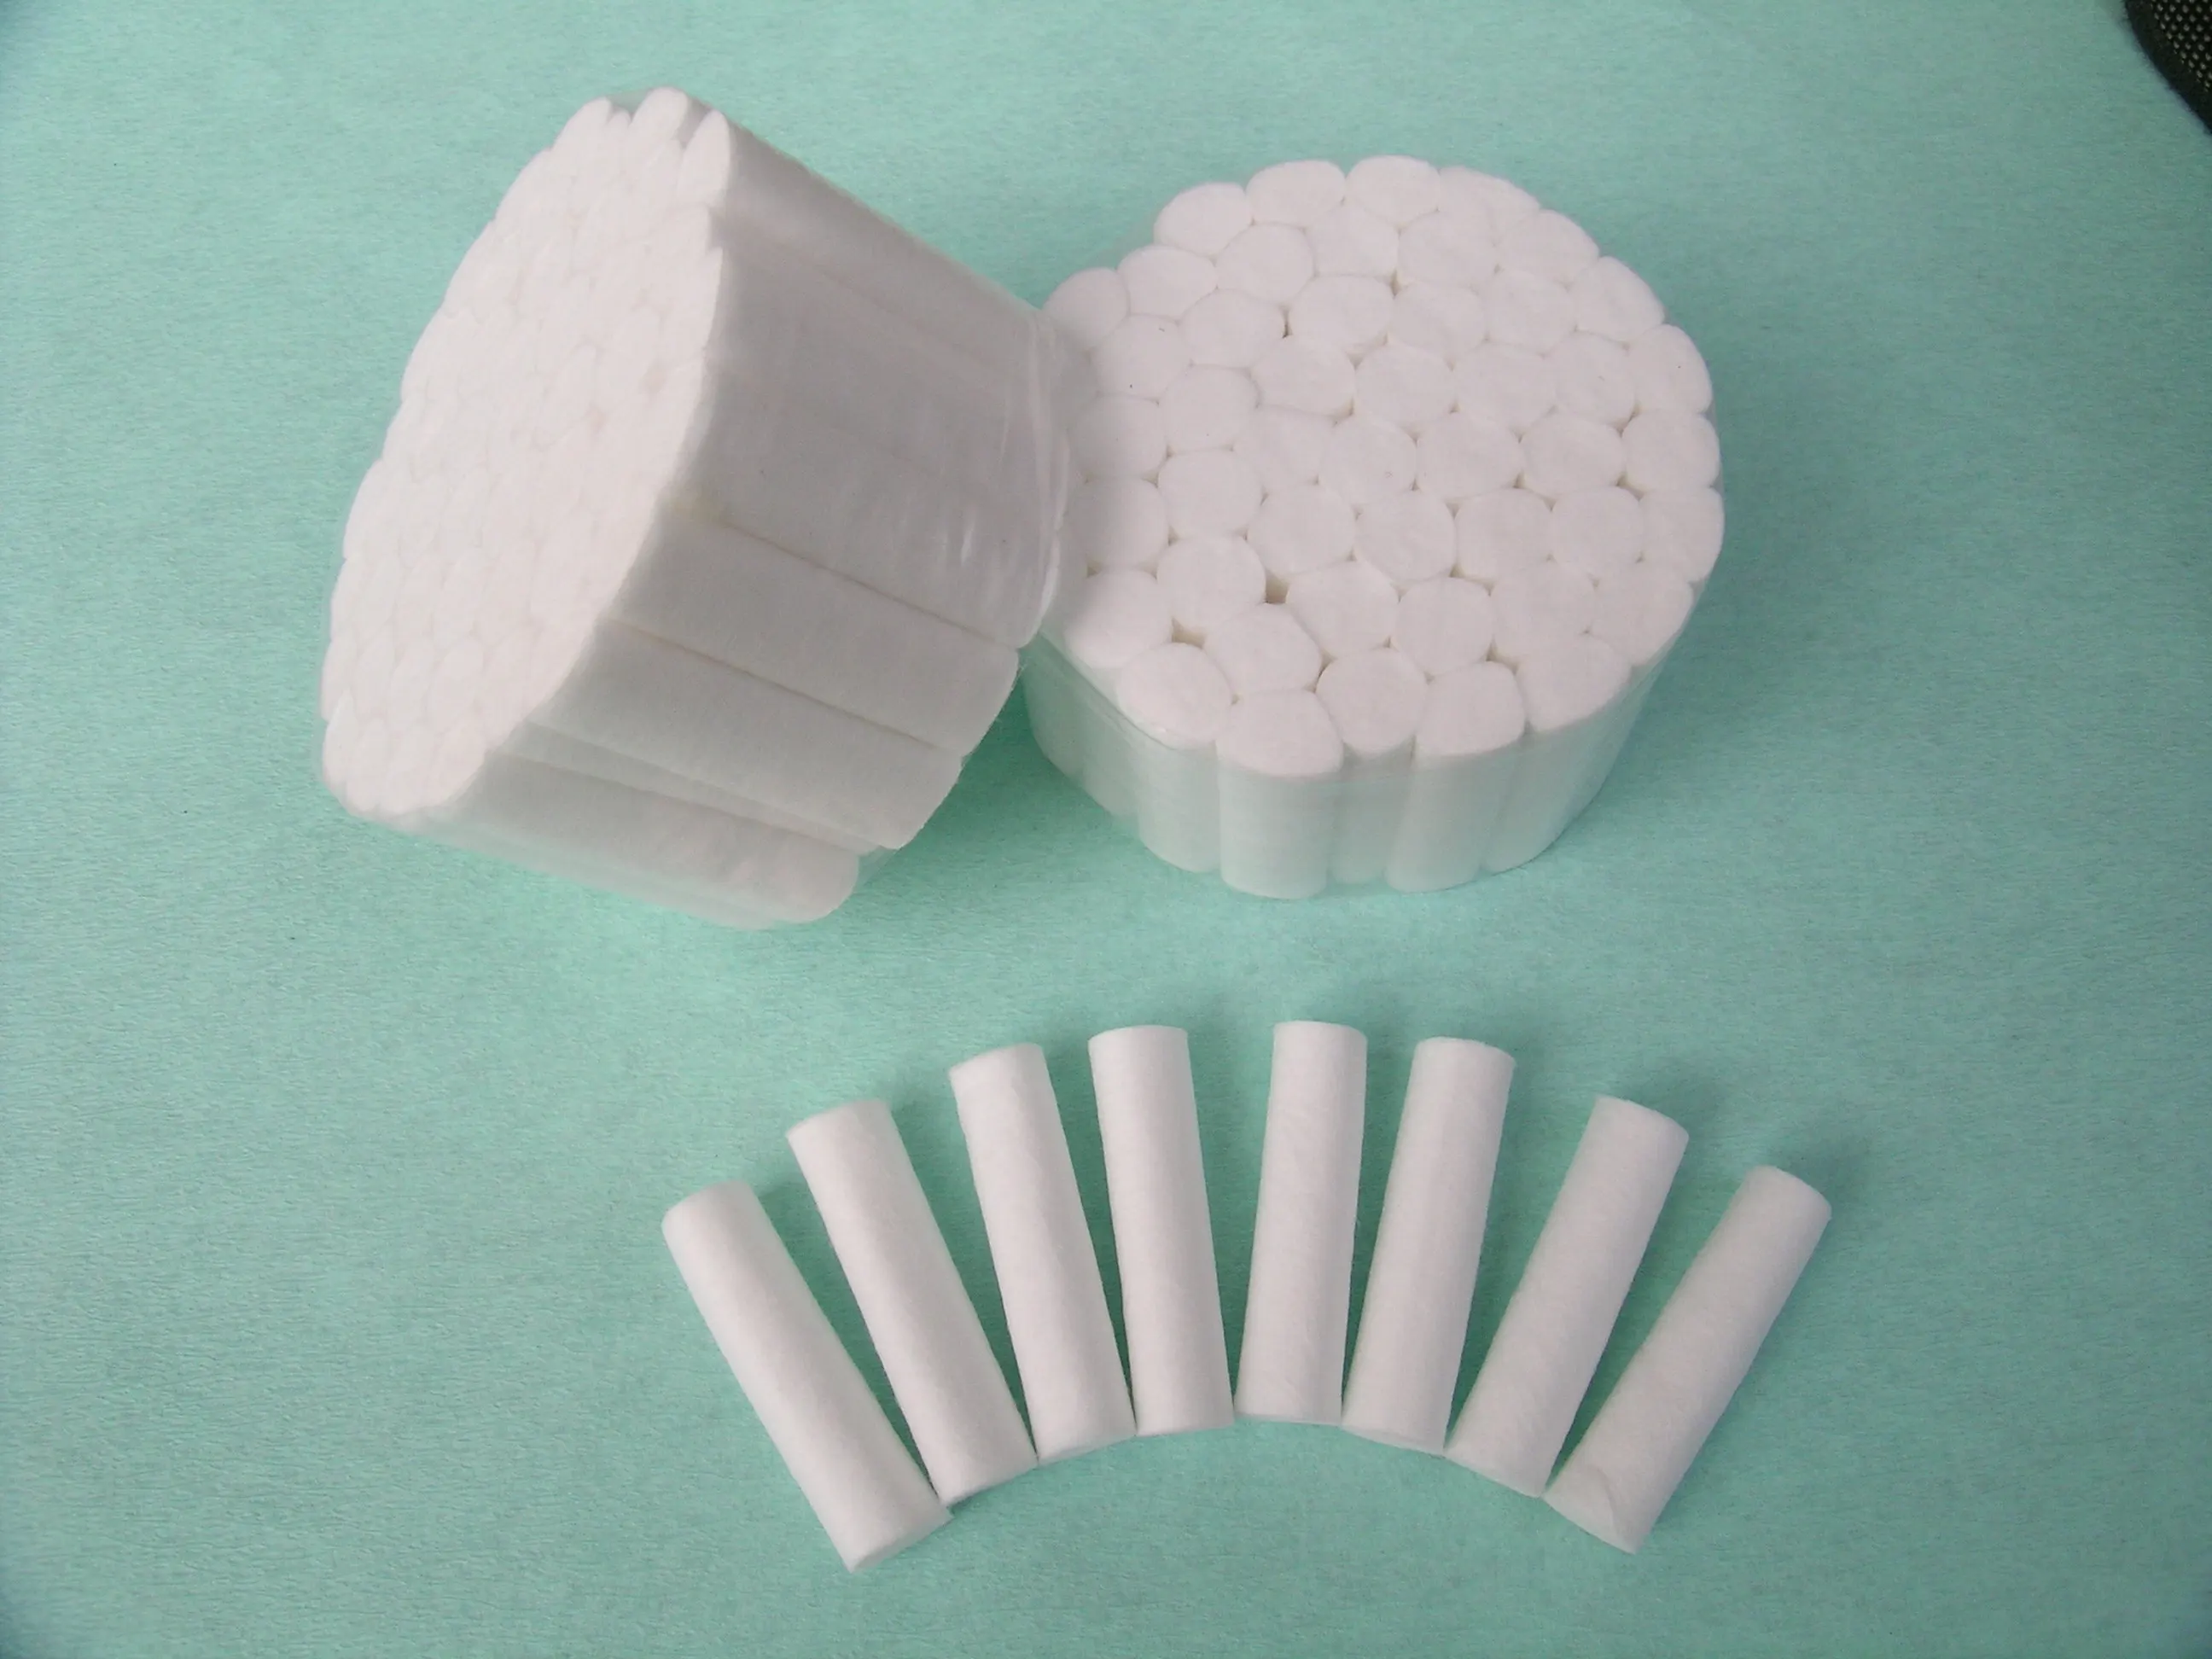  Premium Dental Cotton Rolls #2 Medium 1.5 x 3/8 Extra  Absorbent Non-Sterile Cotton Roll (100 Pack) : Industrial & Scientific